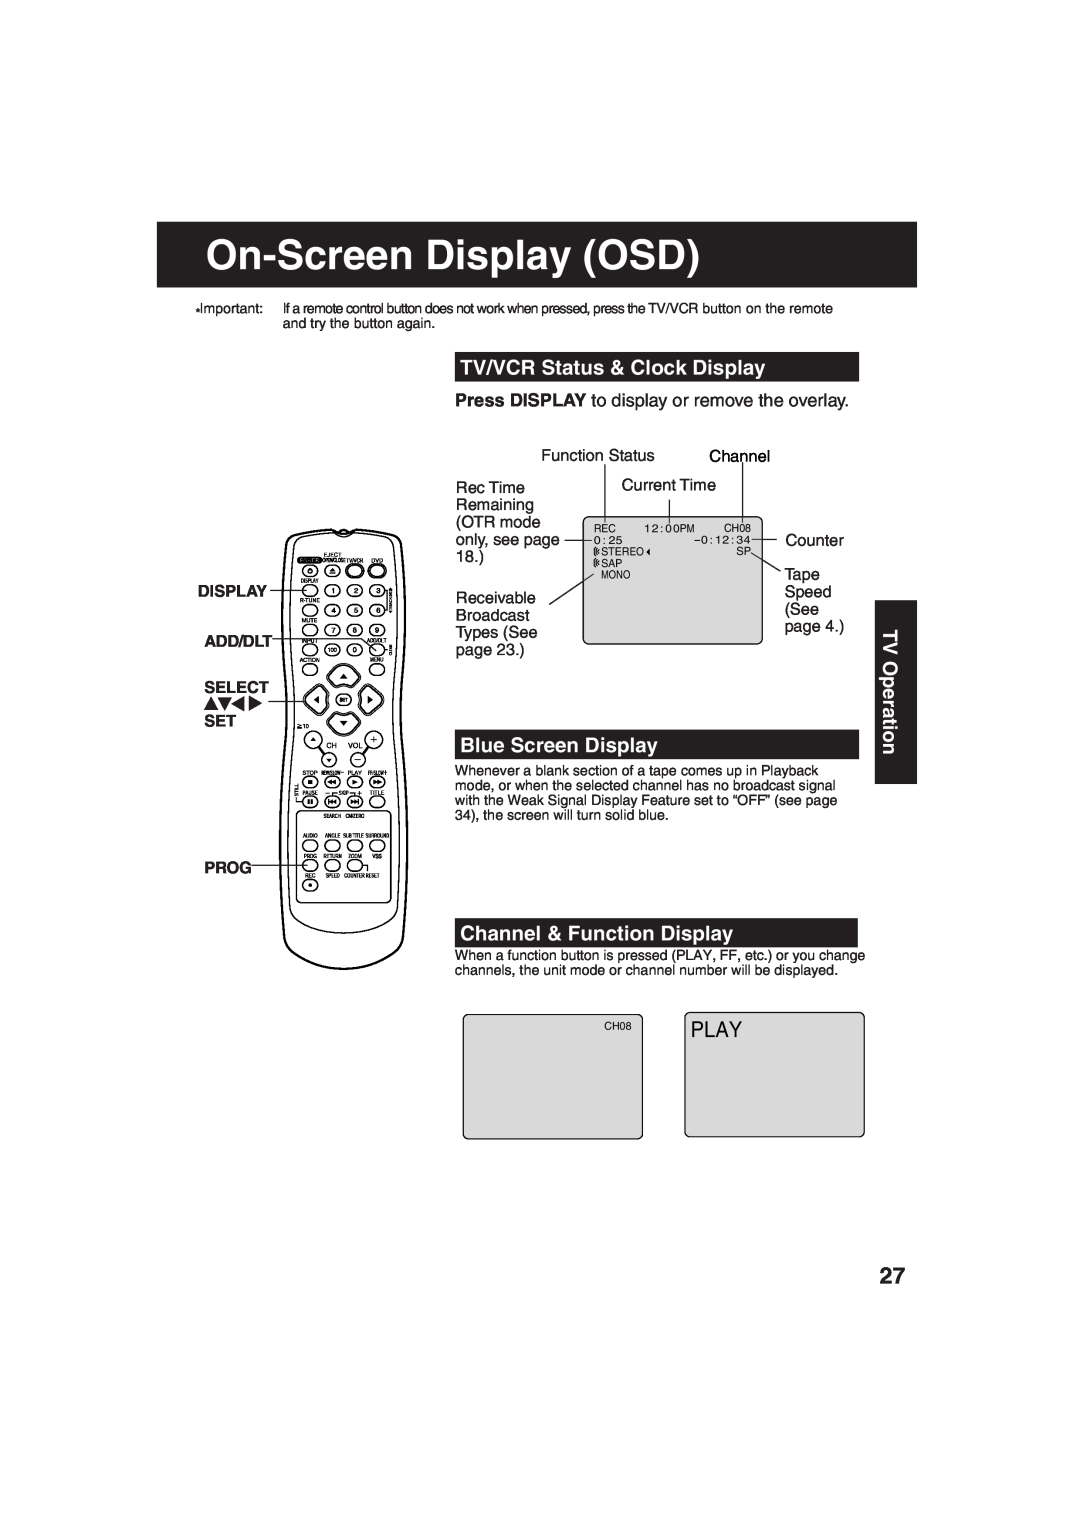 Panasonic PV-DF273 On-Screen Display OSD, TV/VCR Status & Clock Display, Blue Screen Display, Channel & Function Display 